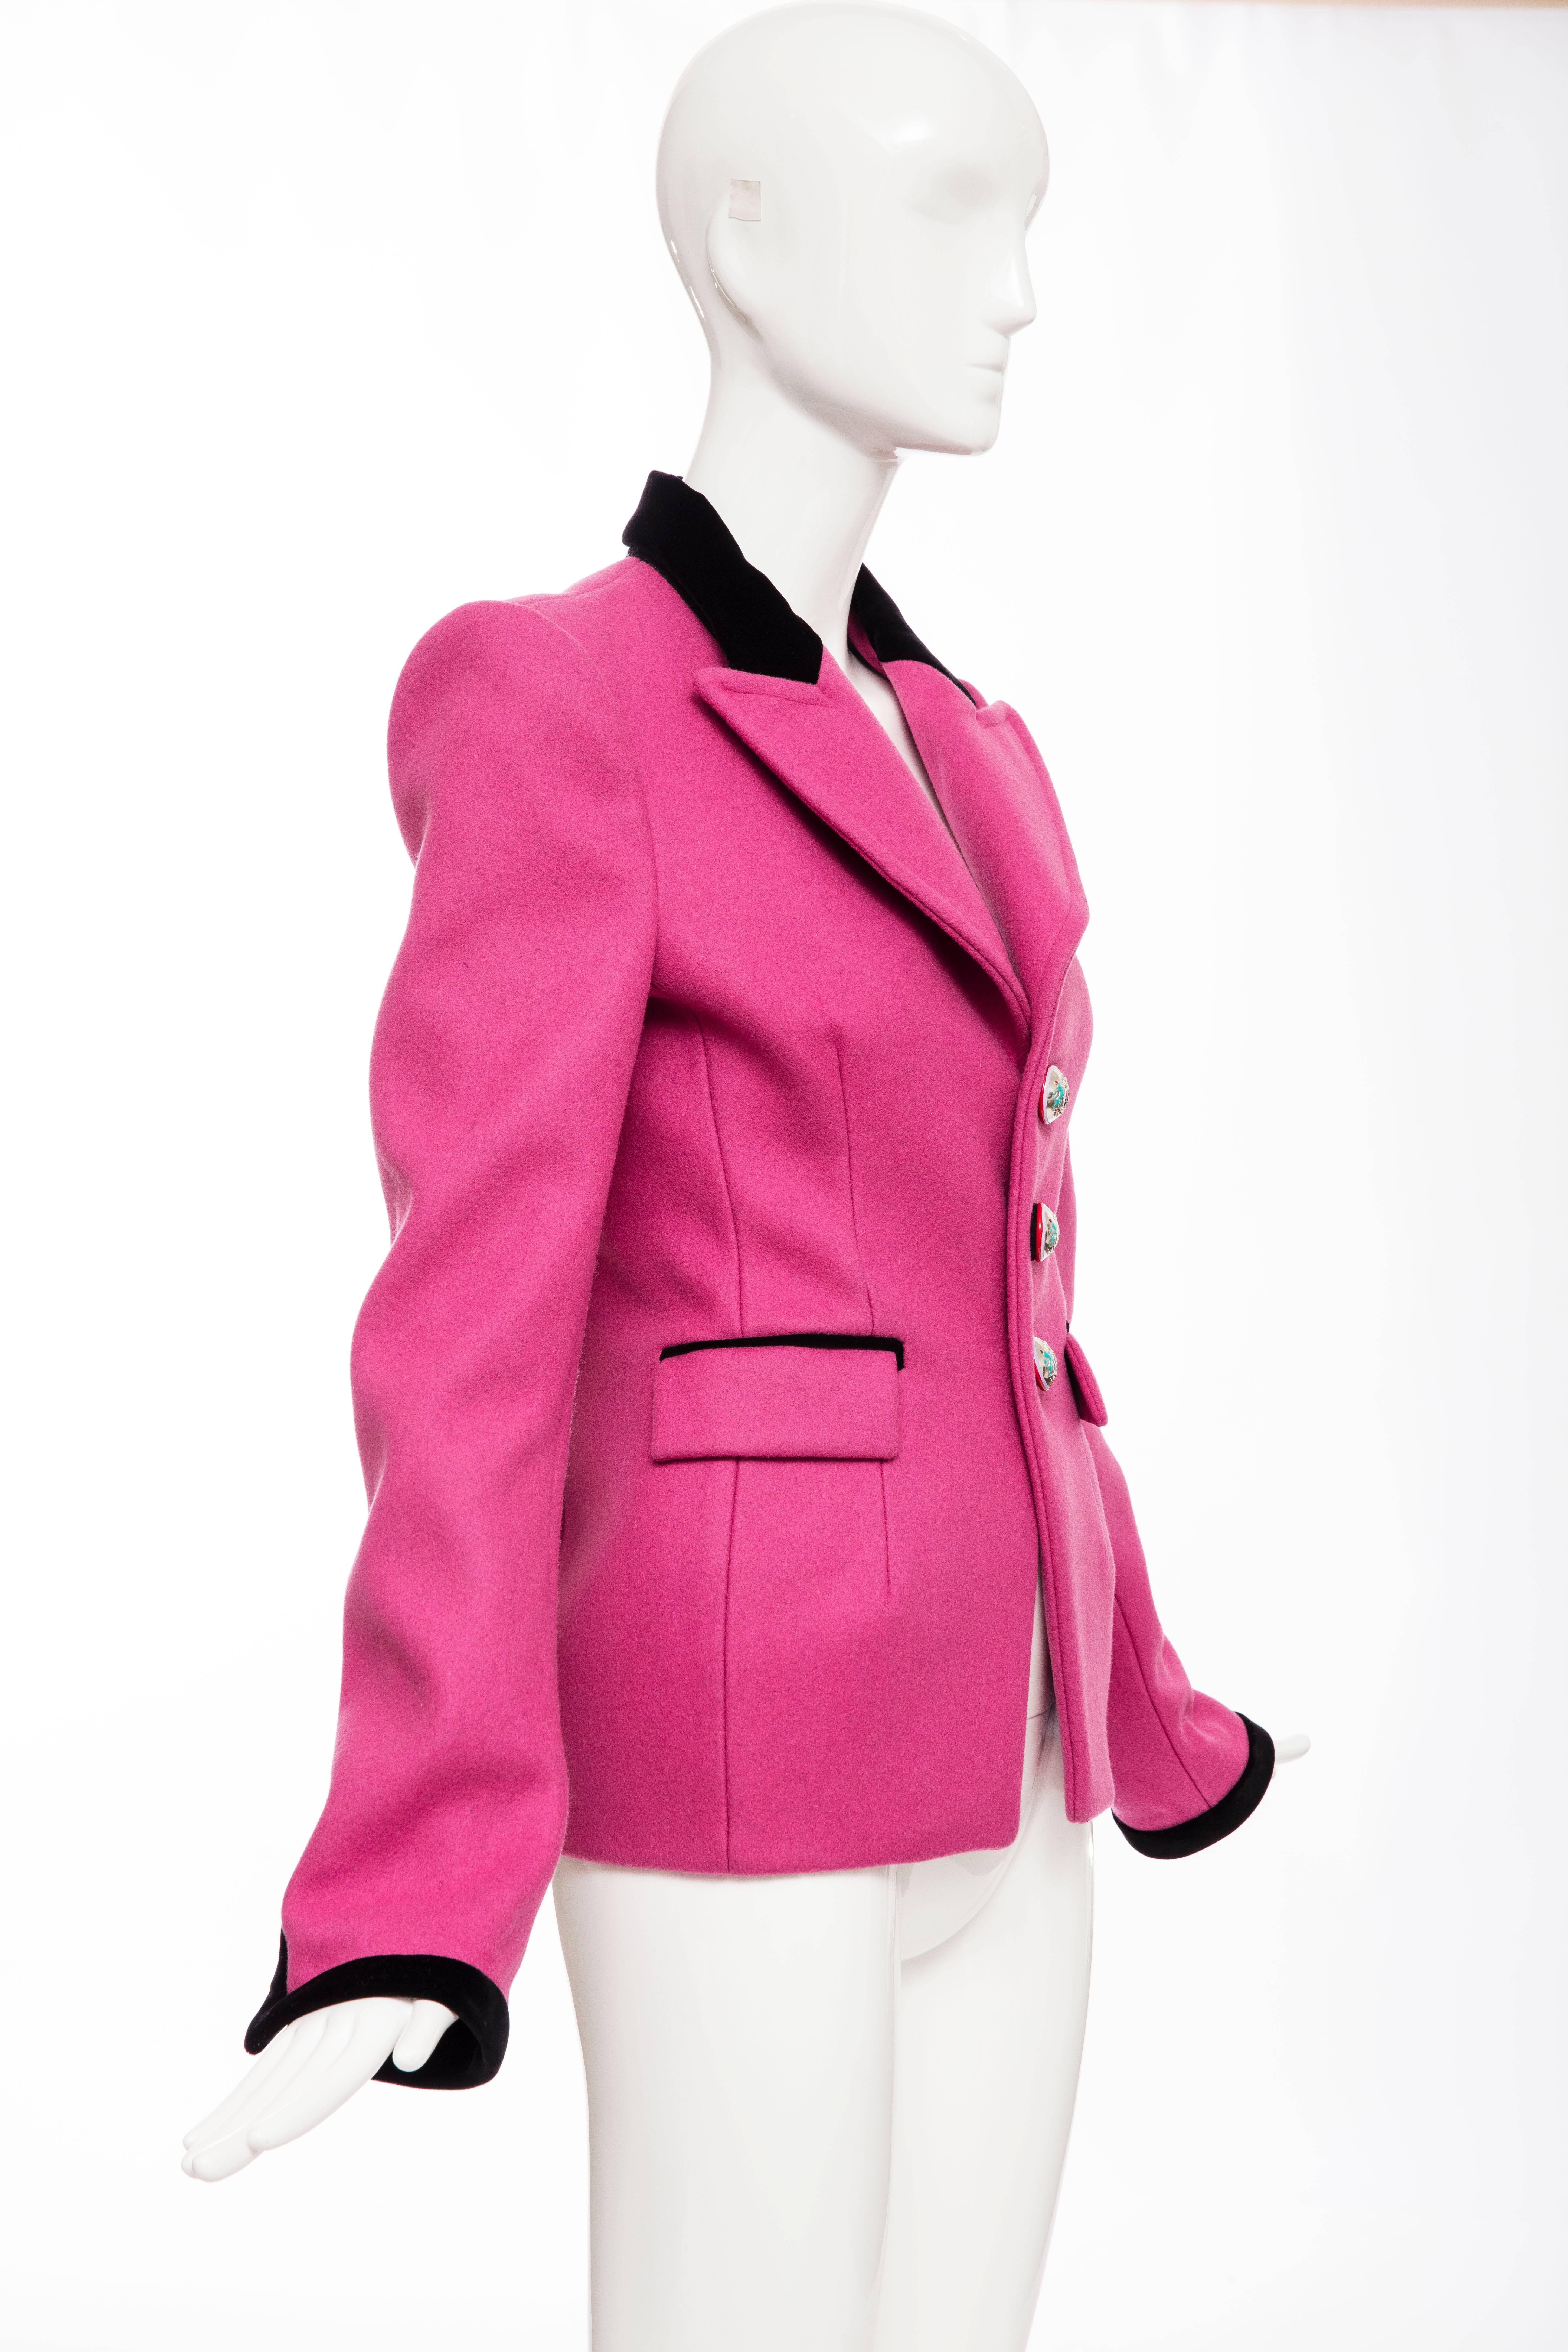  Nicolas Ghesquière for Balenciaga Runway Pink Wool Velvet Blazer, Fall 2007 In Excellent Condition For Sale In Cincinnati, OH